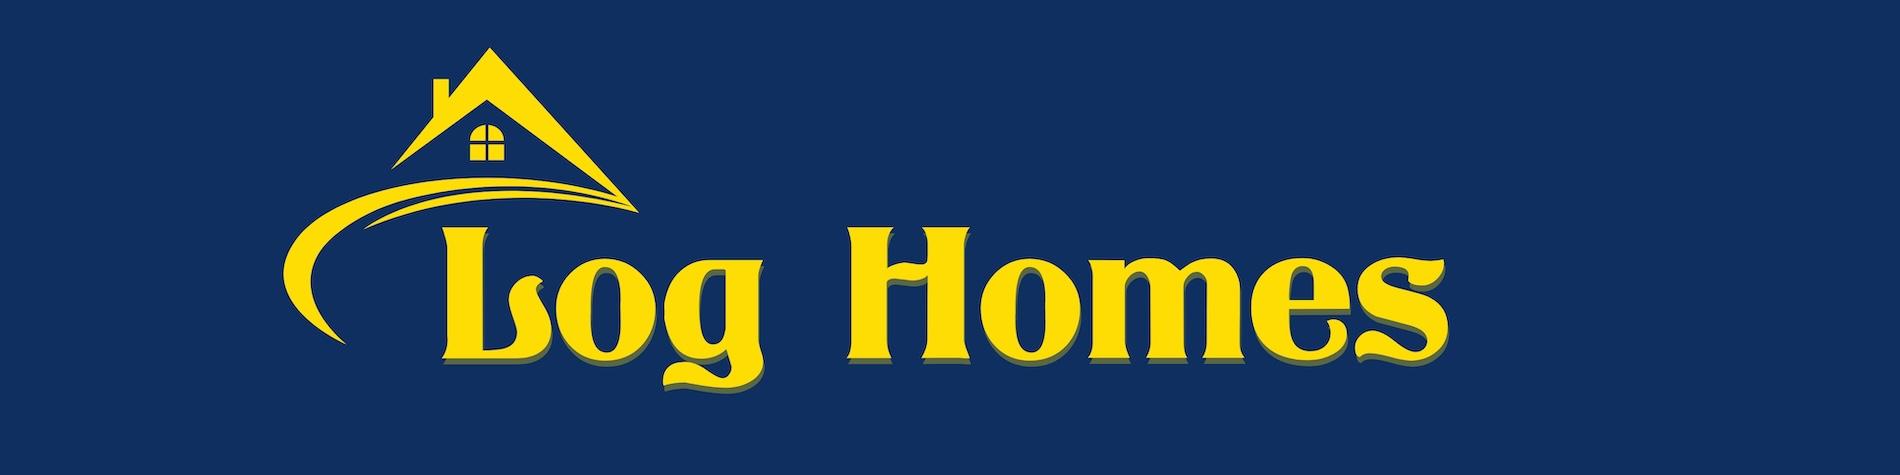 log homes banner